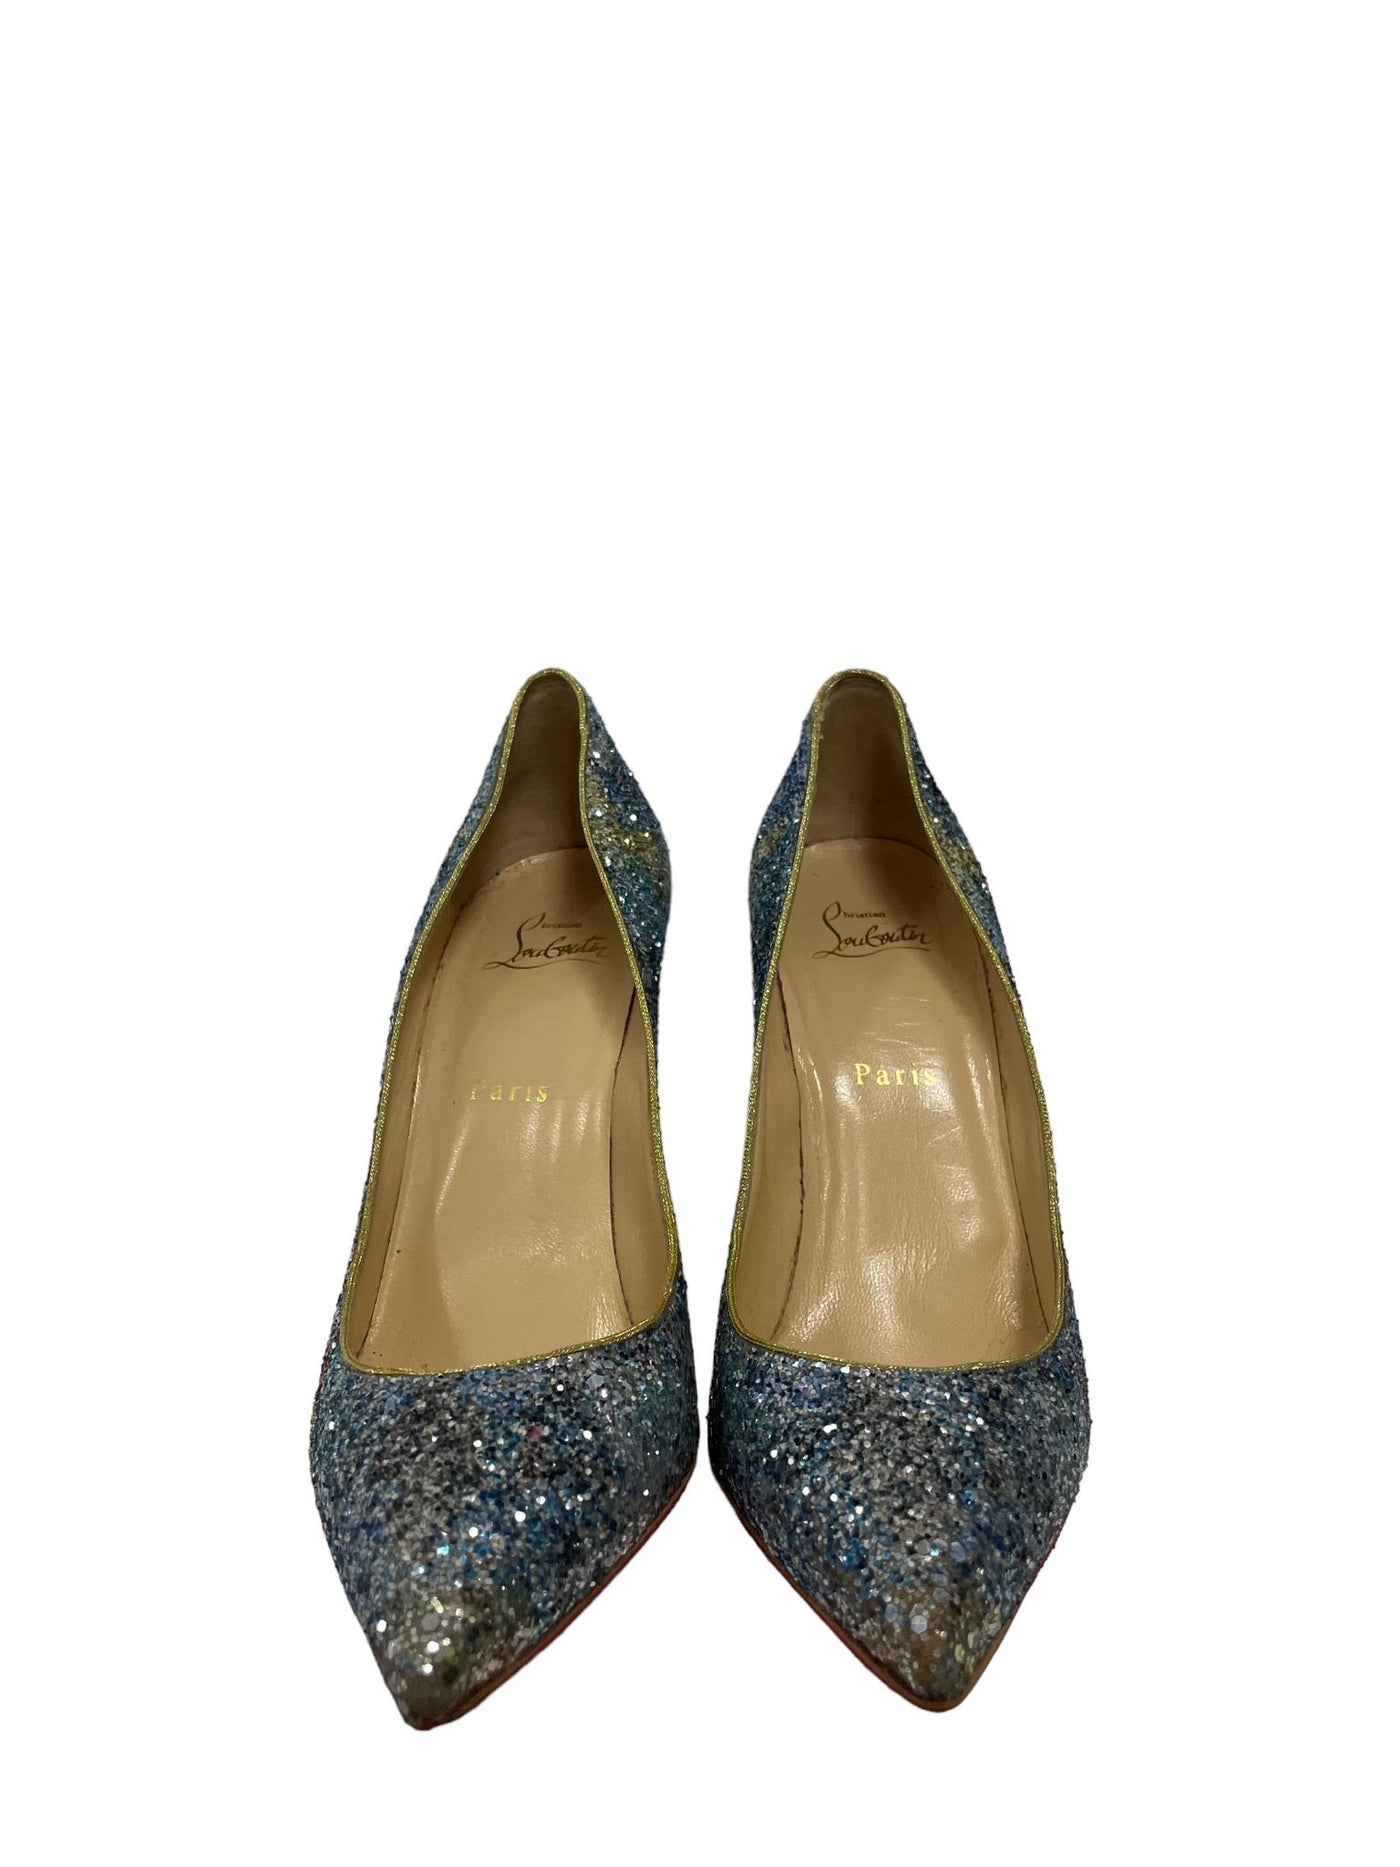 Glitter Christian Louboutin heels size 39